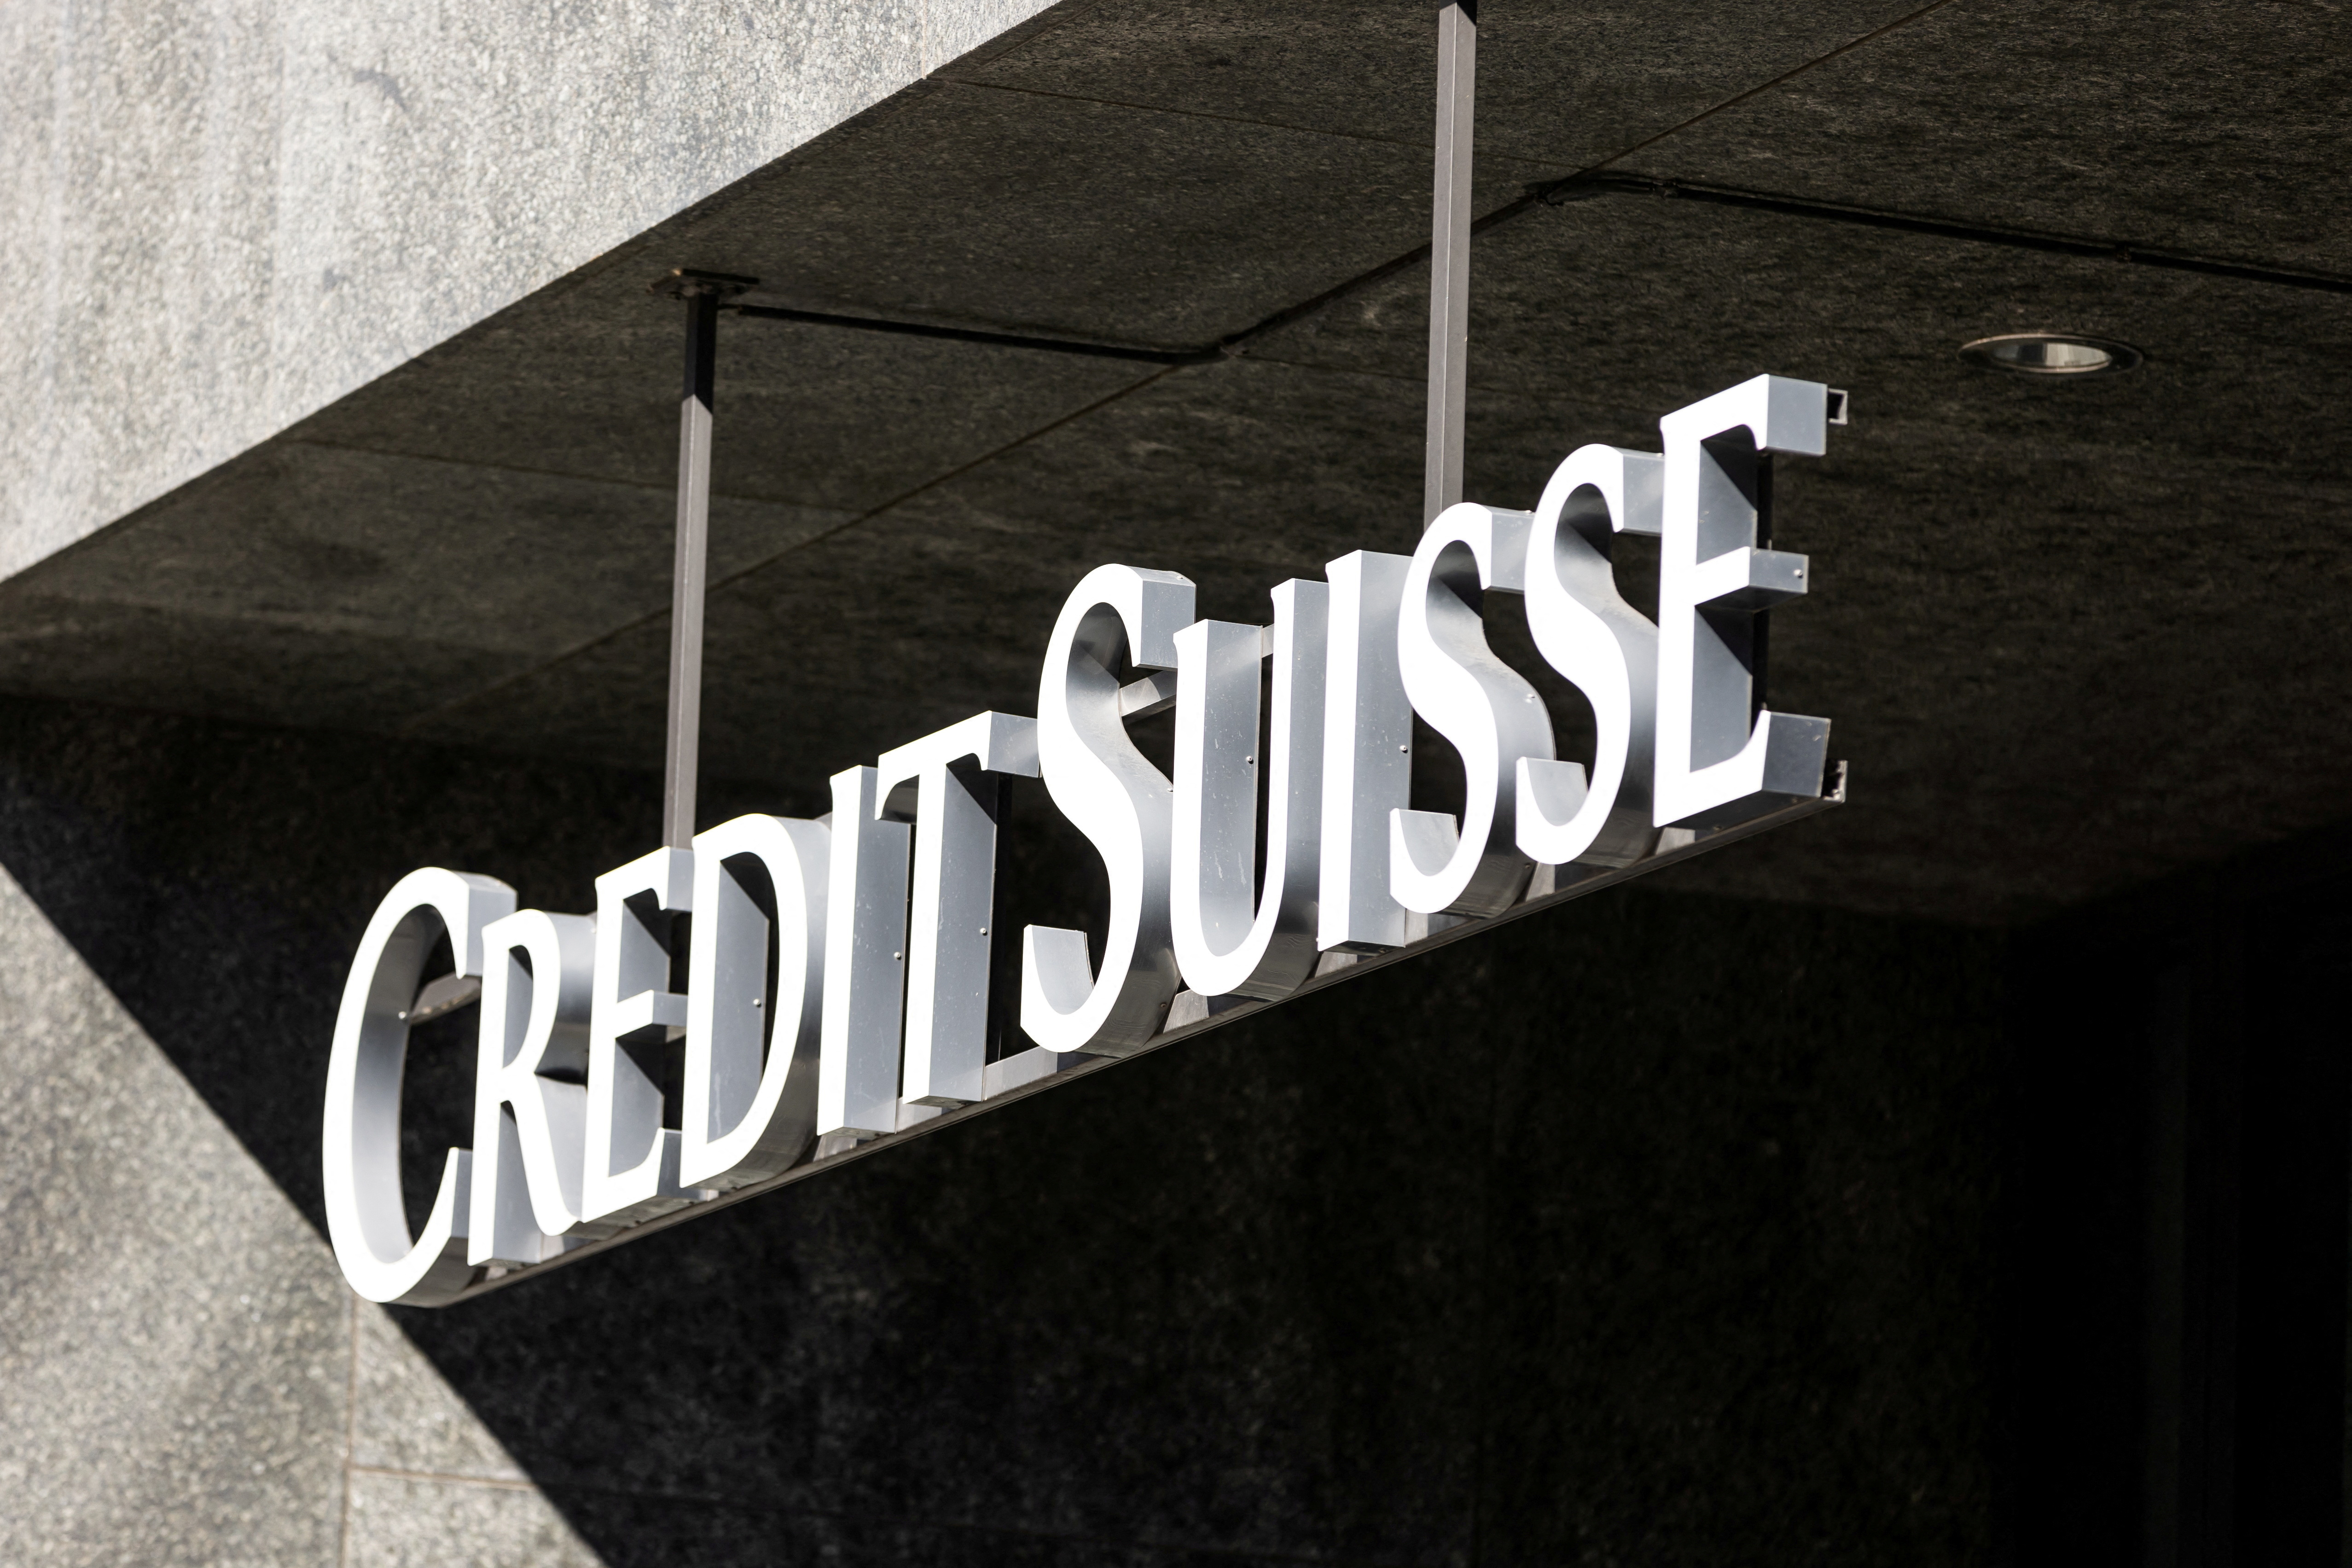 Credit Suisse logo on a building